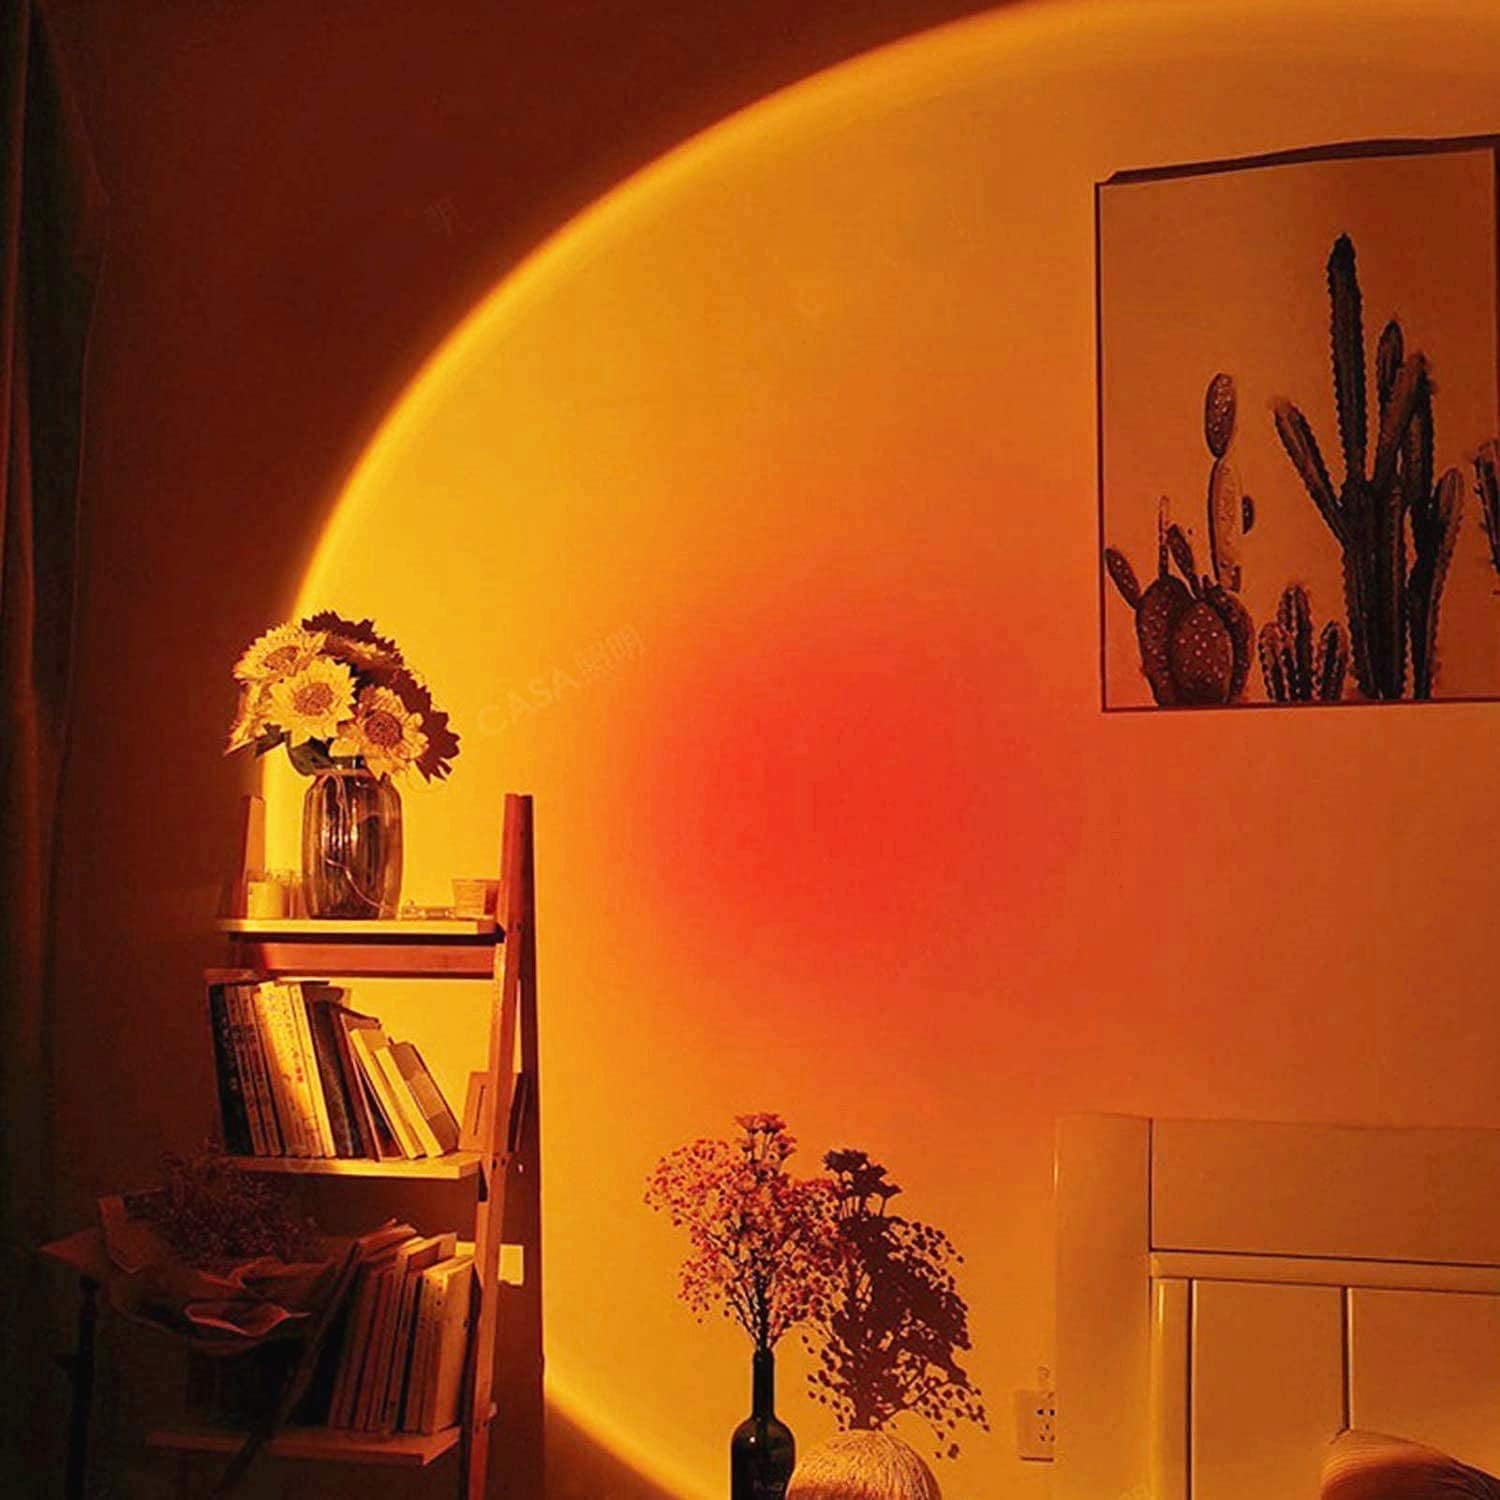 Sunset Lamp Projection Sunset Lamp Projector, Night Light Romantic